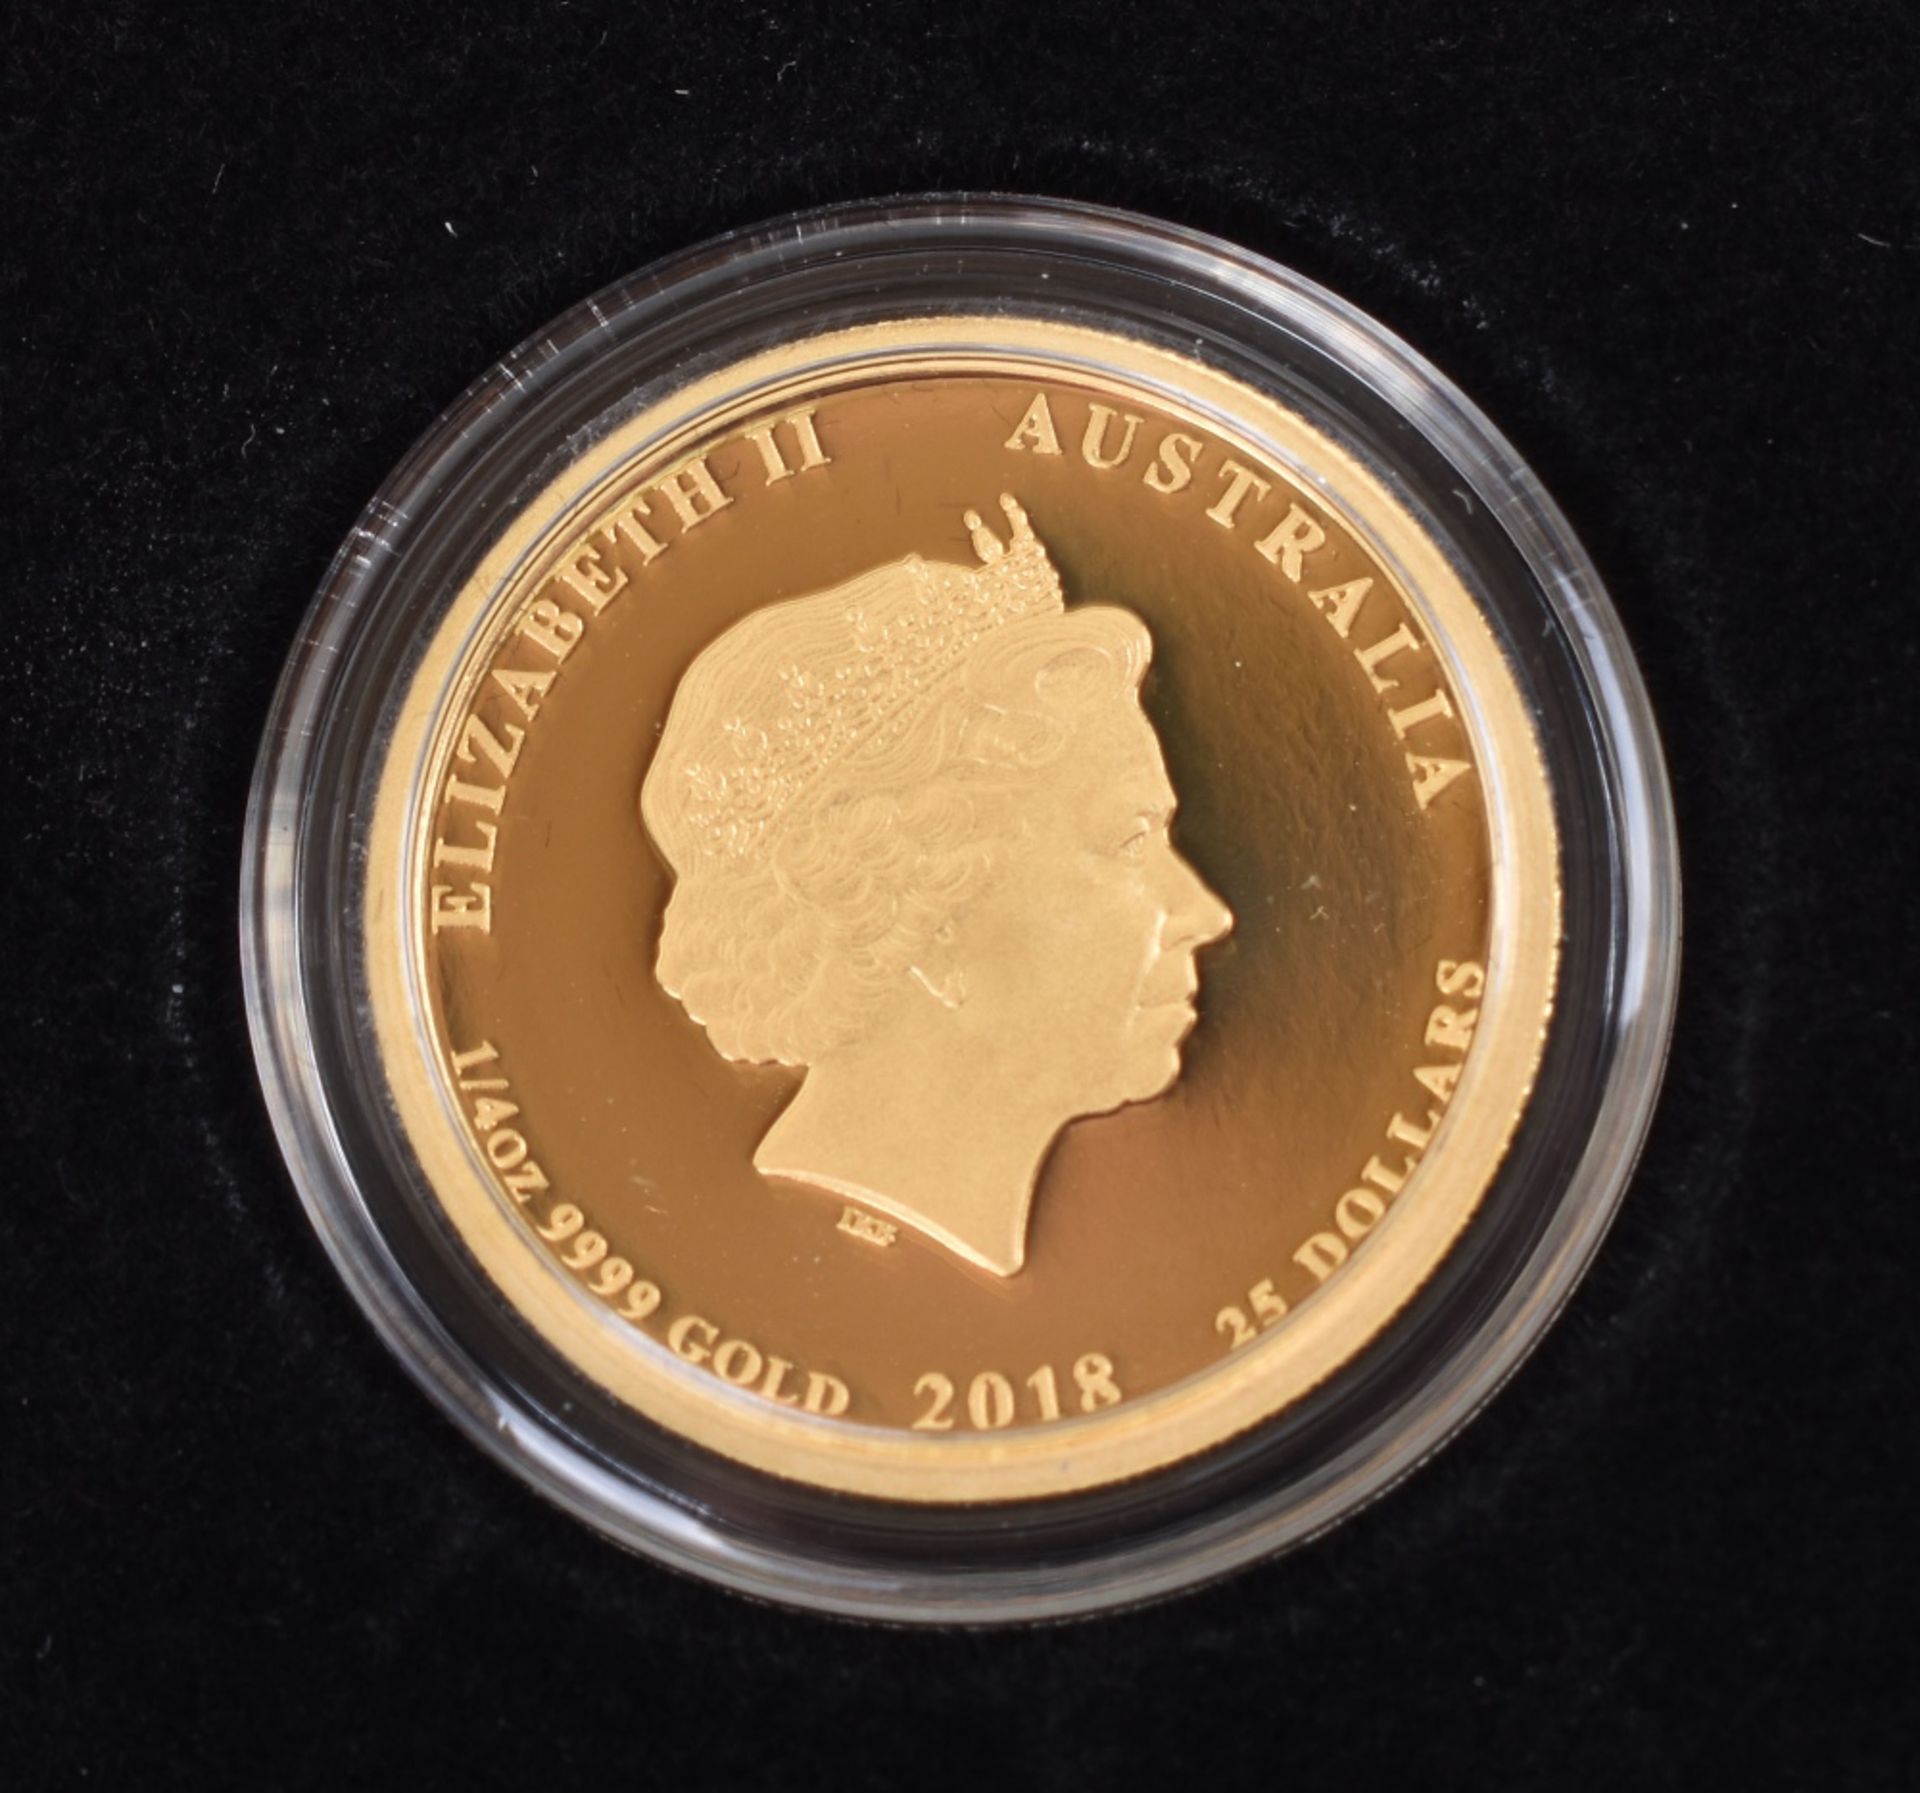 Perth Mind .999 fine gold, 1/4oz 1953-2018 Coronation Anniversary - Image 3 of 3